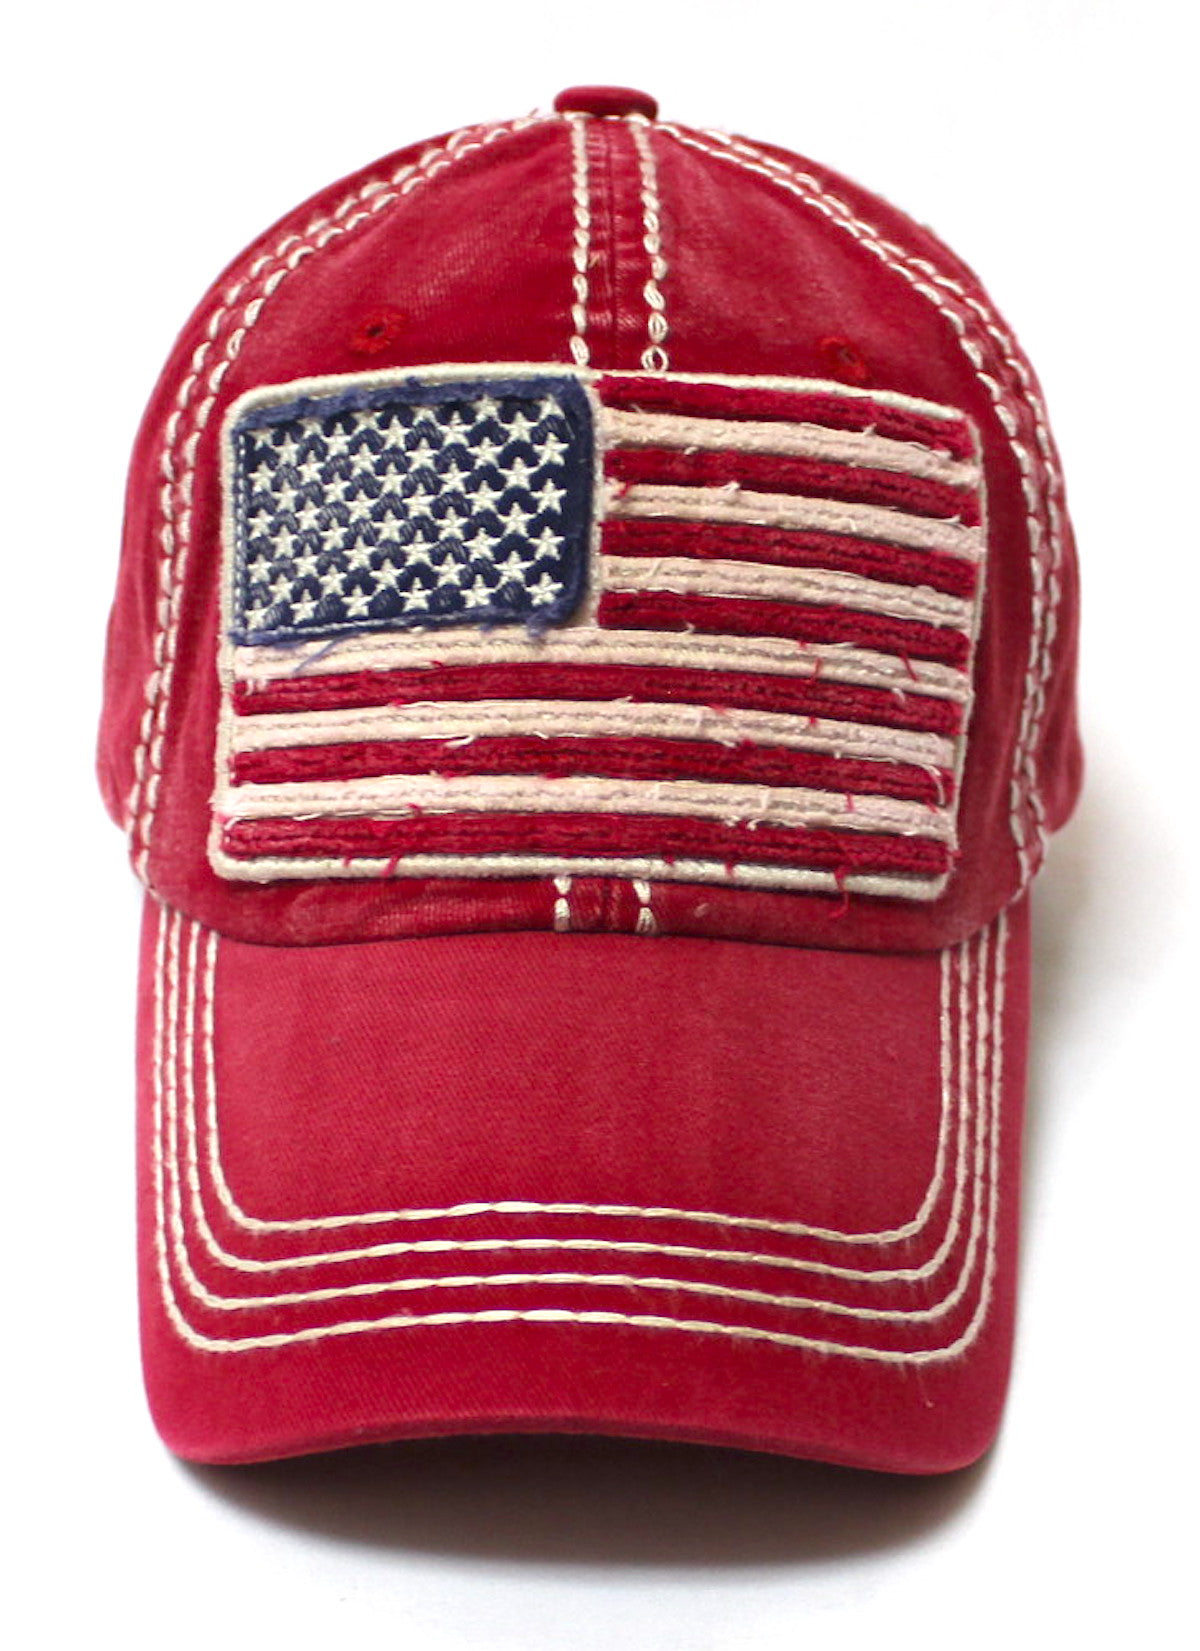 CAPS 'N VINTAGE Vintage Red Oversized American Flag Patch Embroidery Baseball Cap - Caps 'N Vintage 